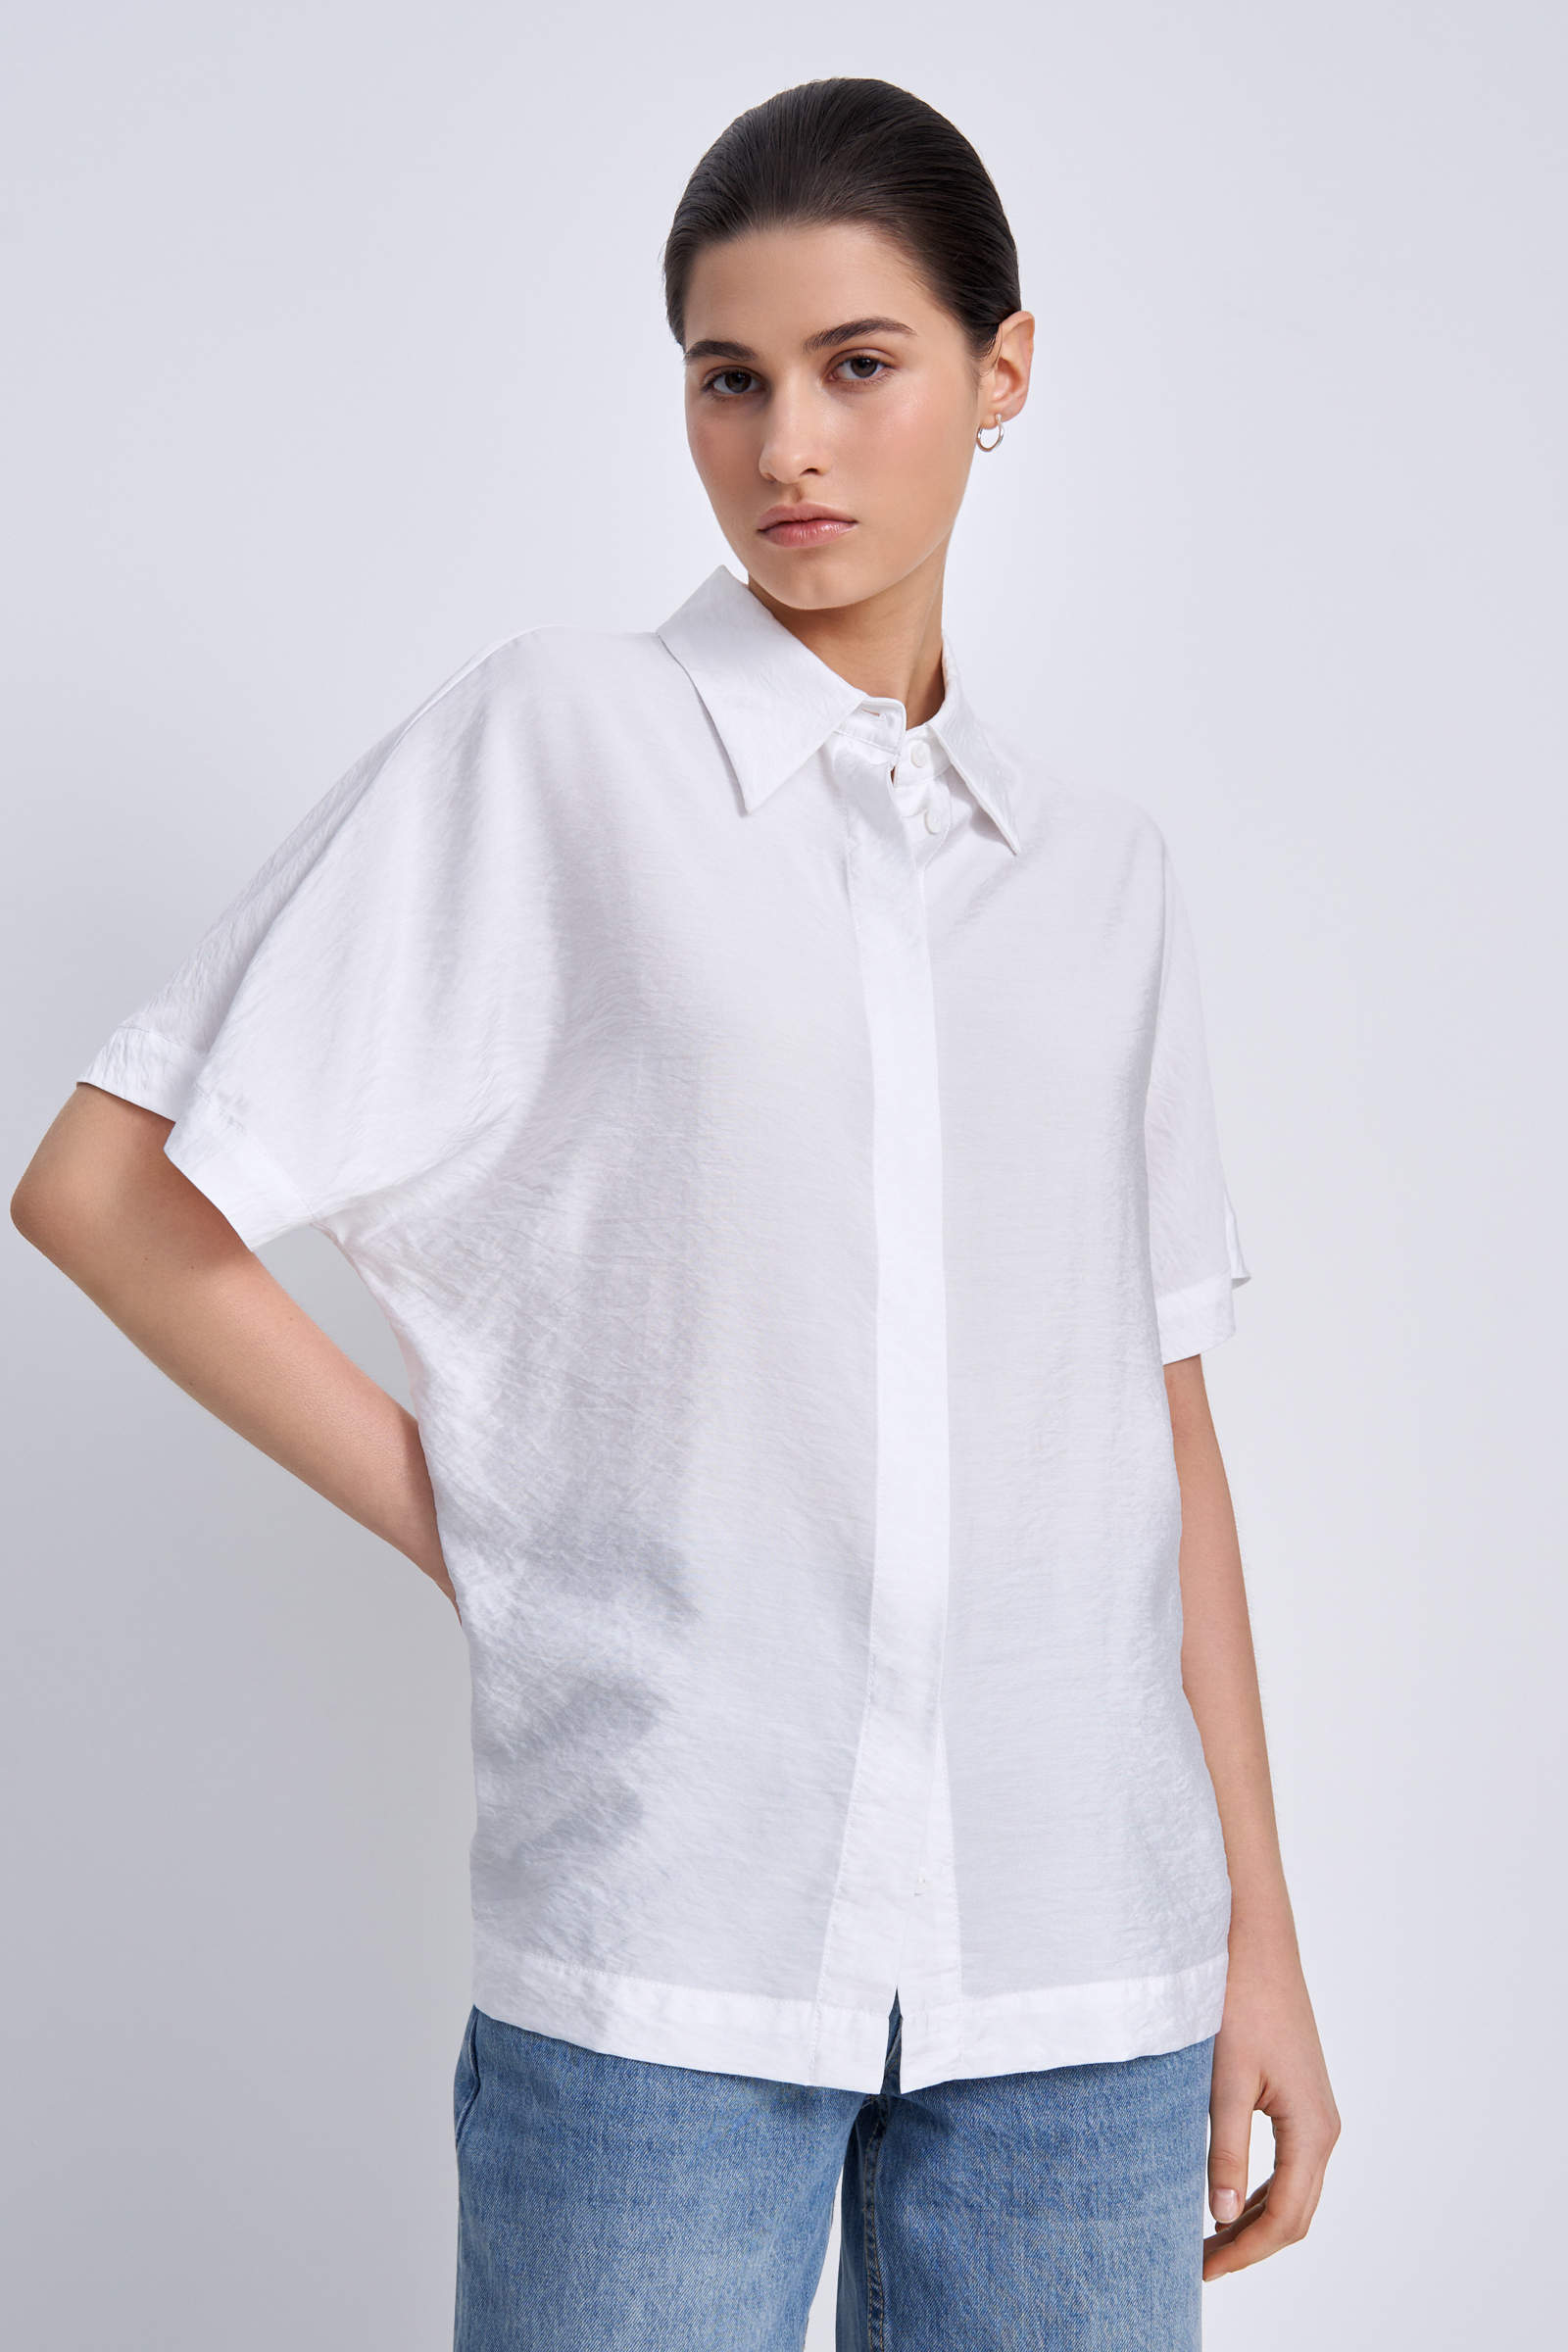 Рубашка женская Finn Flare FSC11045 белая XS